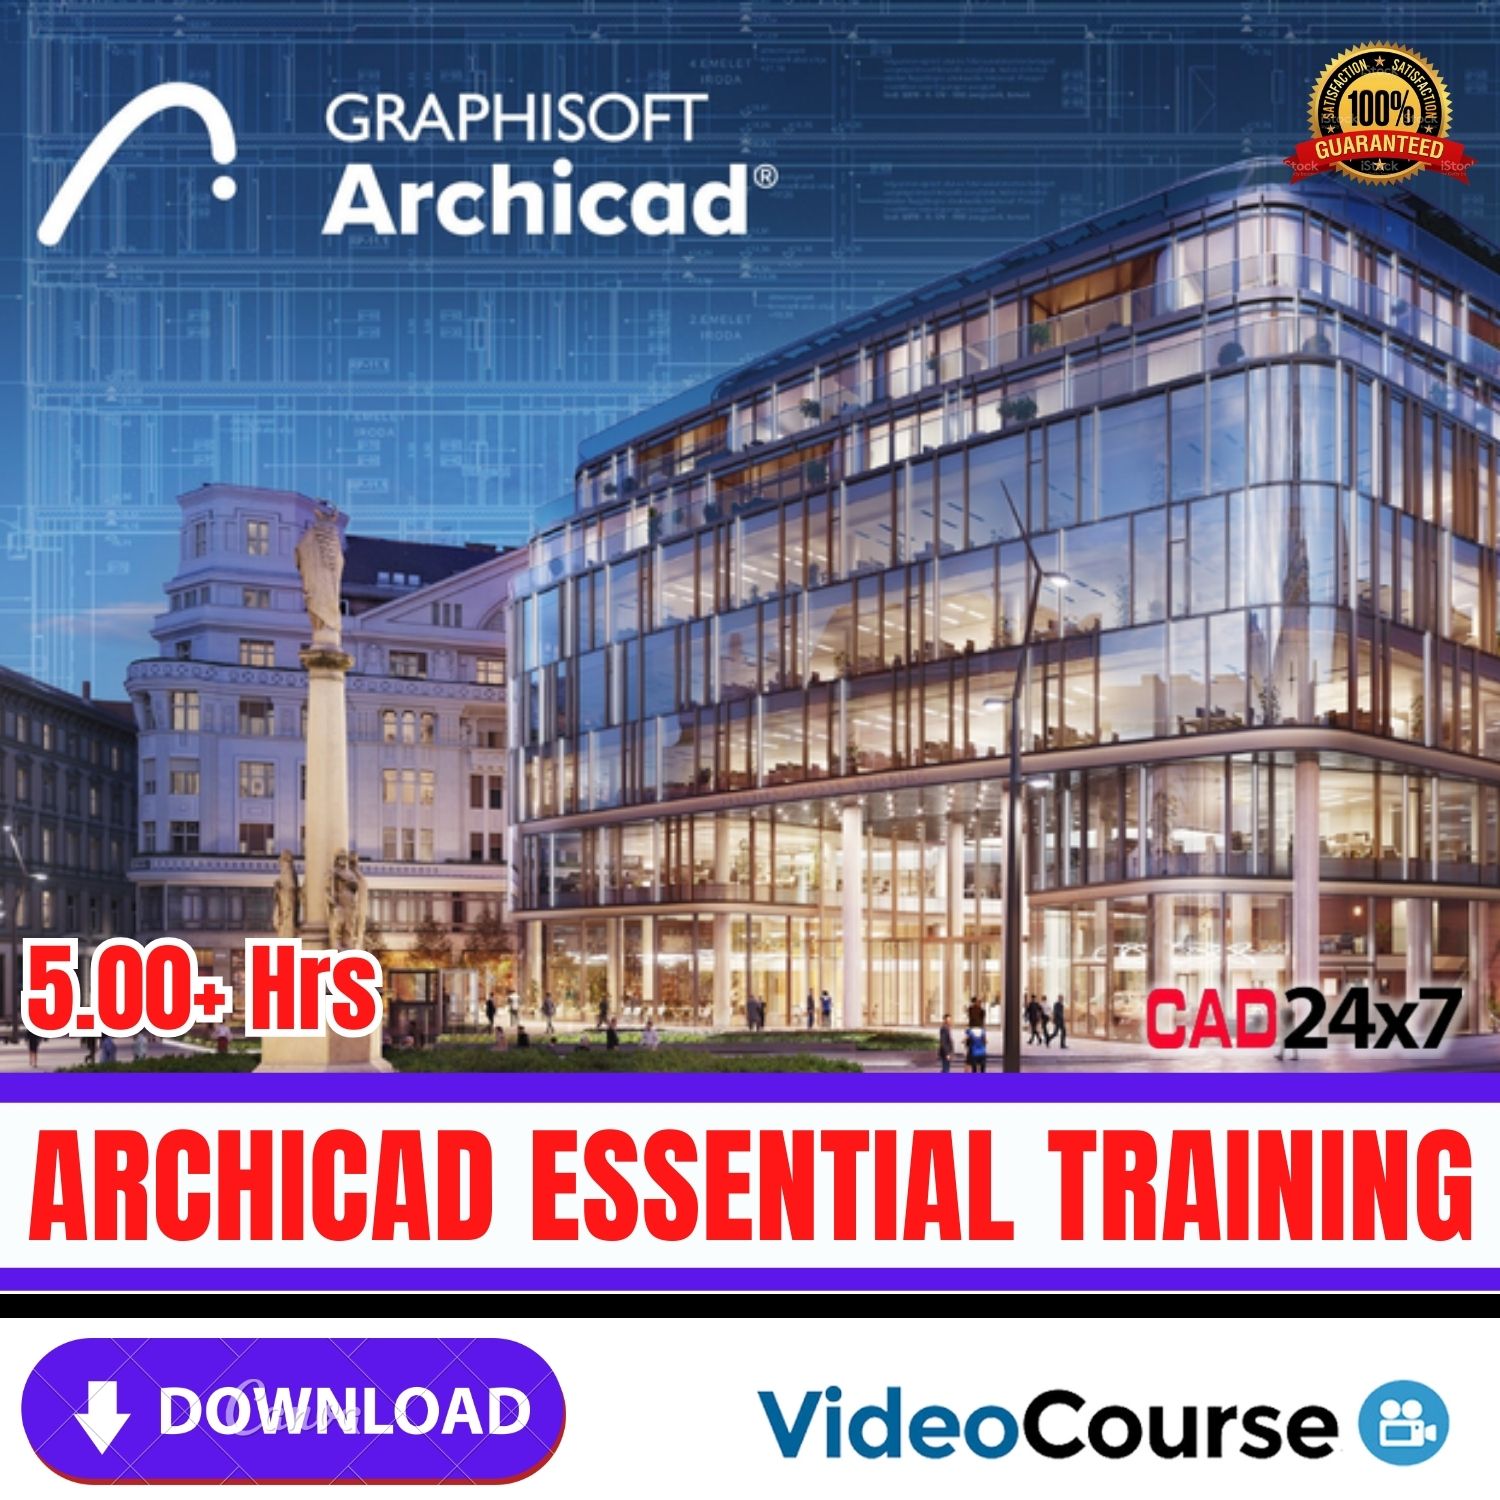 ArchiCAD Essential Training